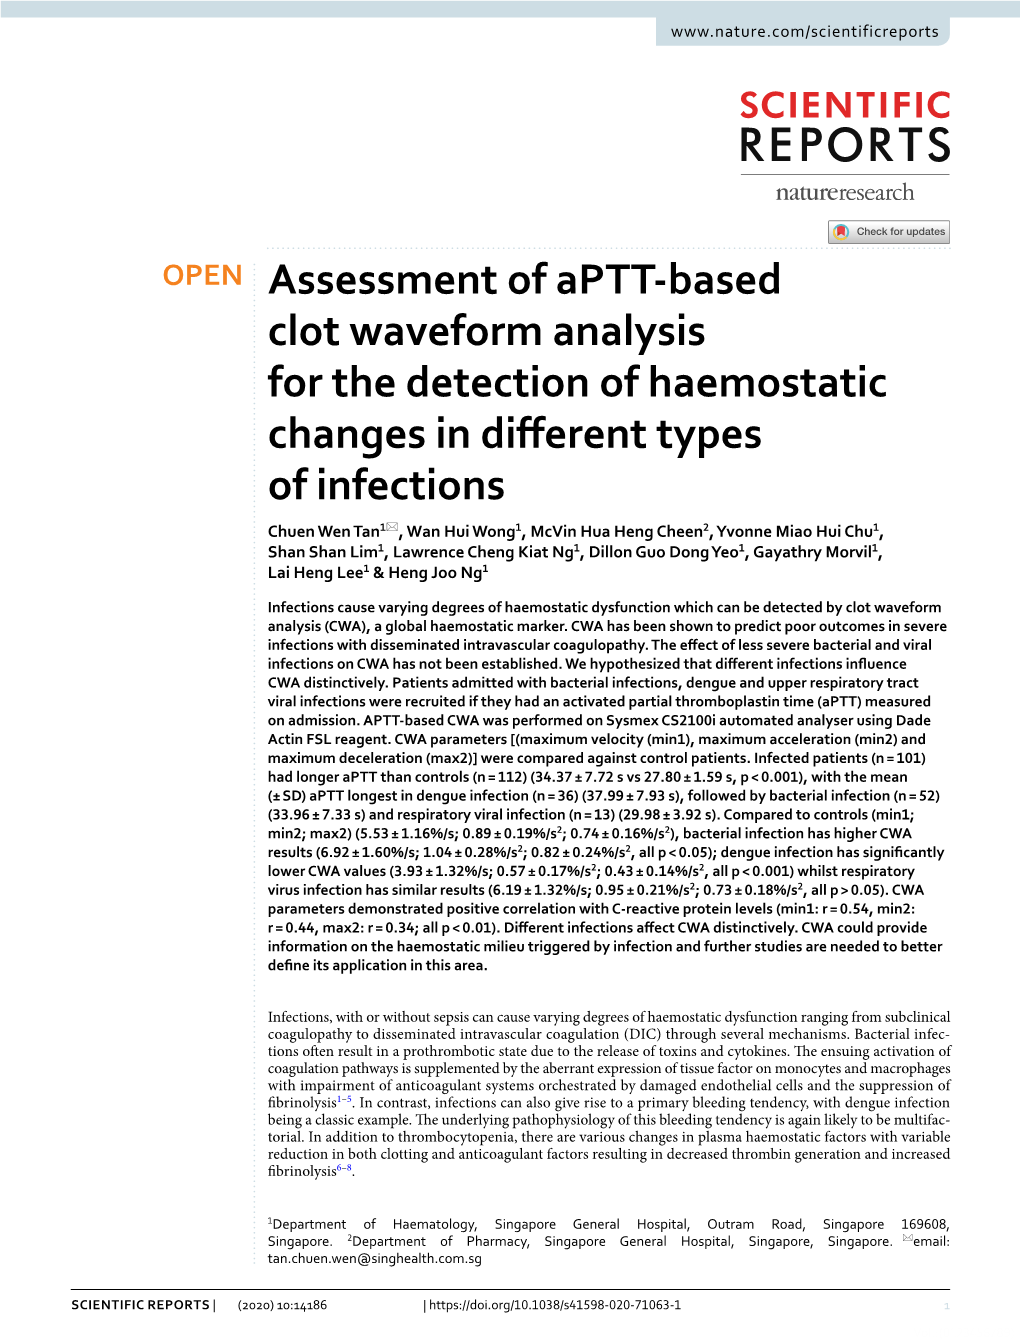 Assessment of Aptt-Based Clot Waveform Analysis for the Detection